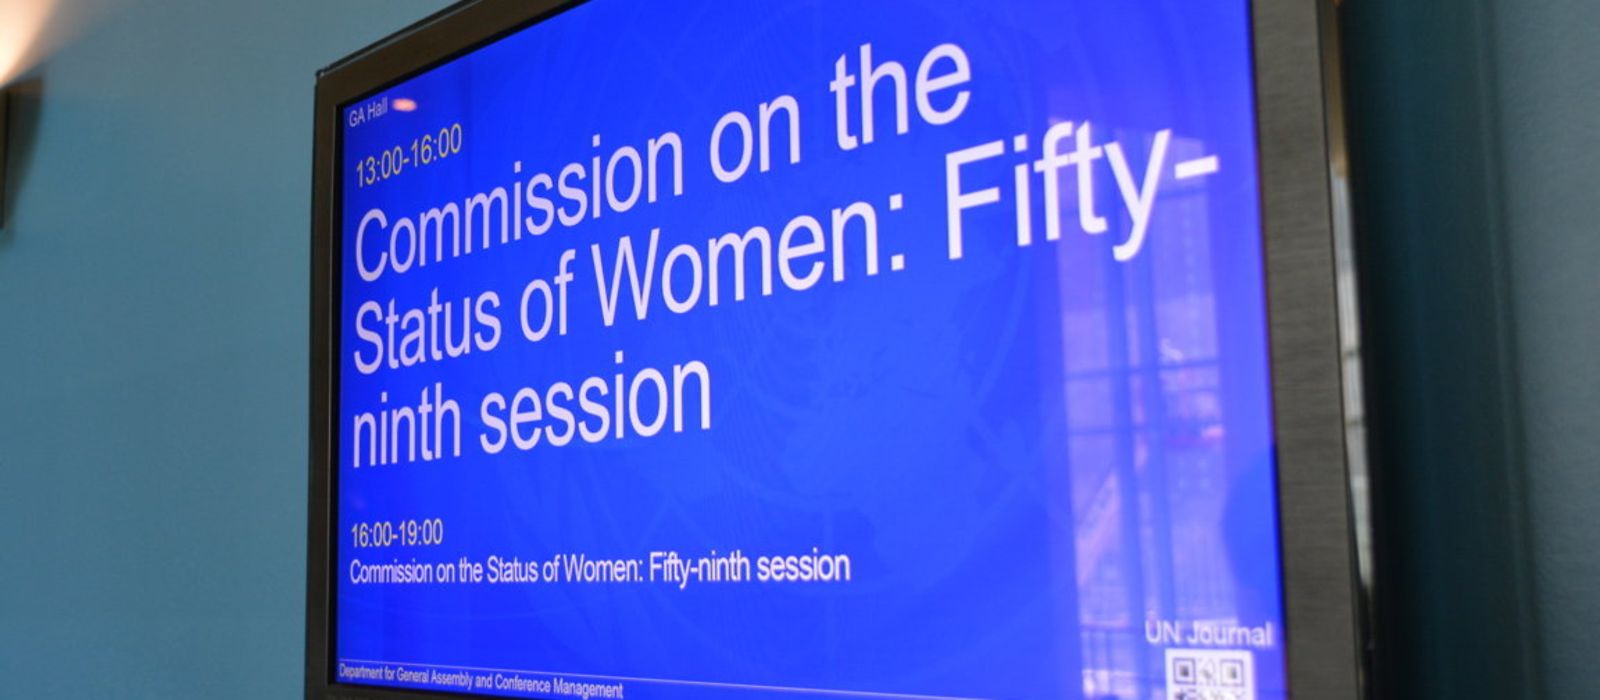 Bildschrim mit weißem Text auf Blau: Commission on the Status of Women: Fifty-ninth session